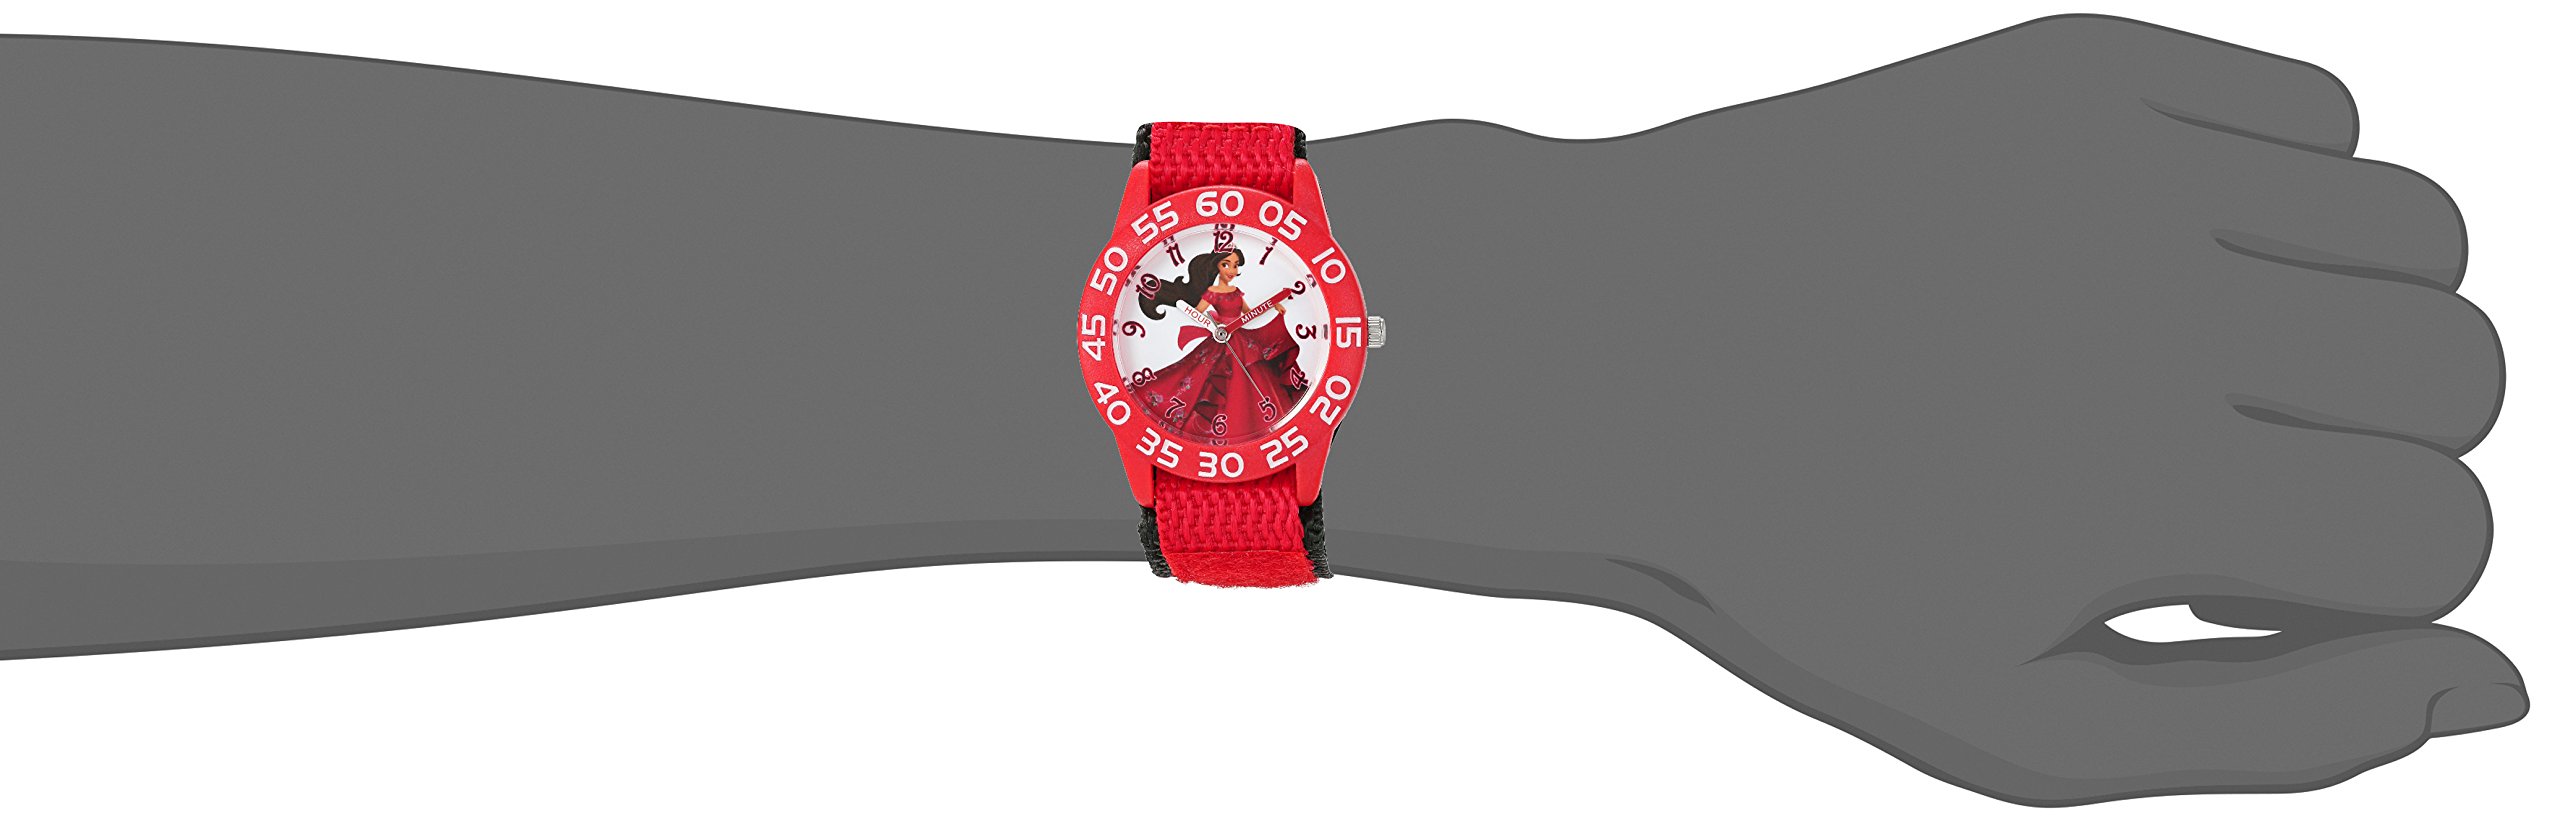 Disney Girl's 'Elena of Avalor' Quartz Plastic and Nylon Watch, Color:Red (Model: W003025)